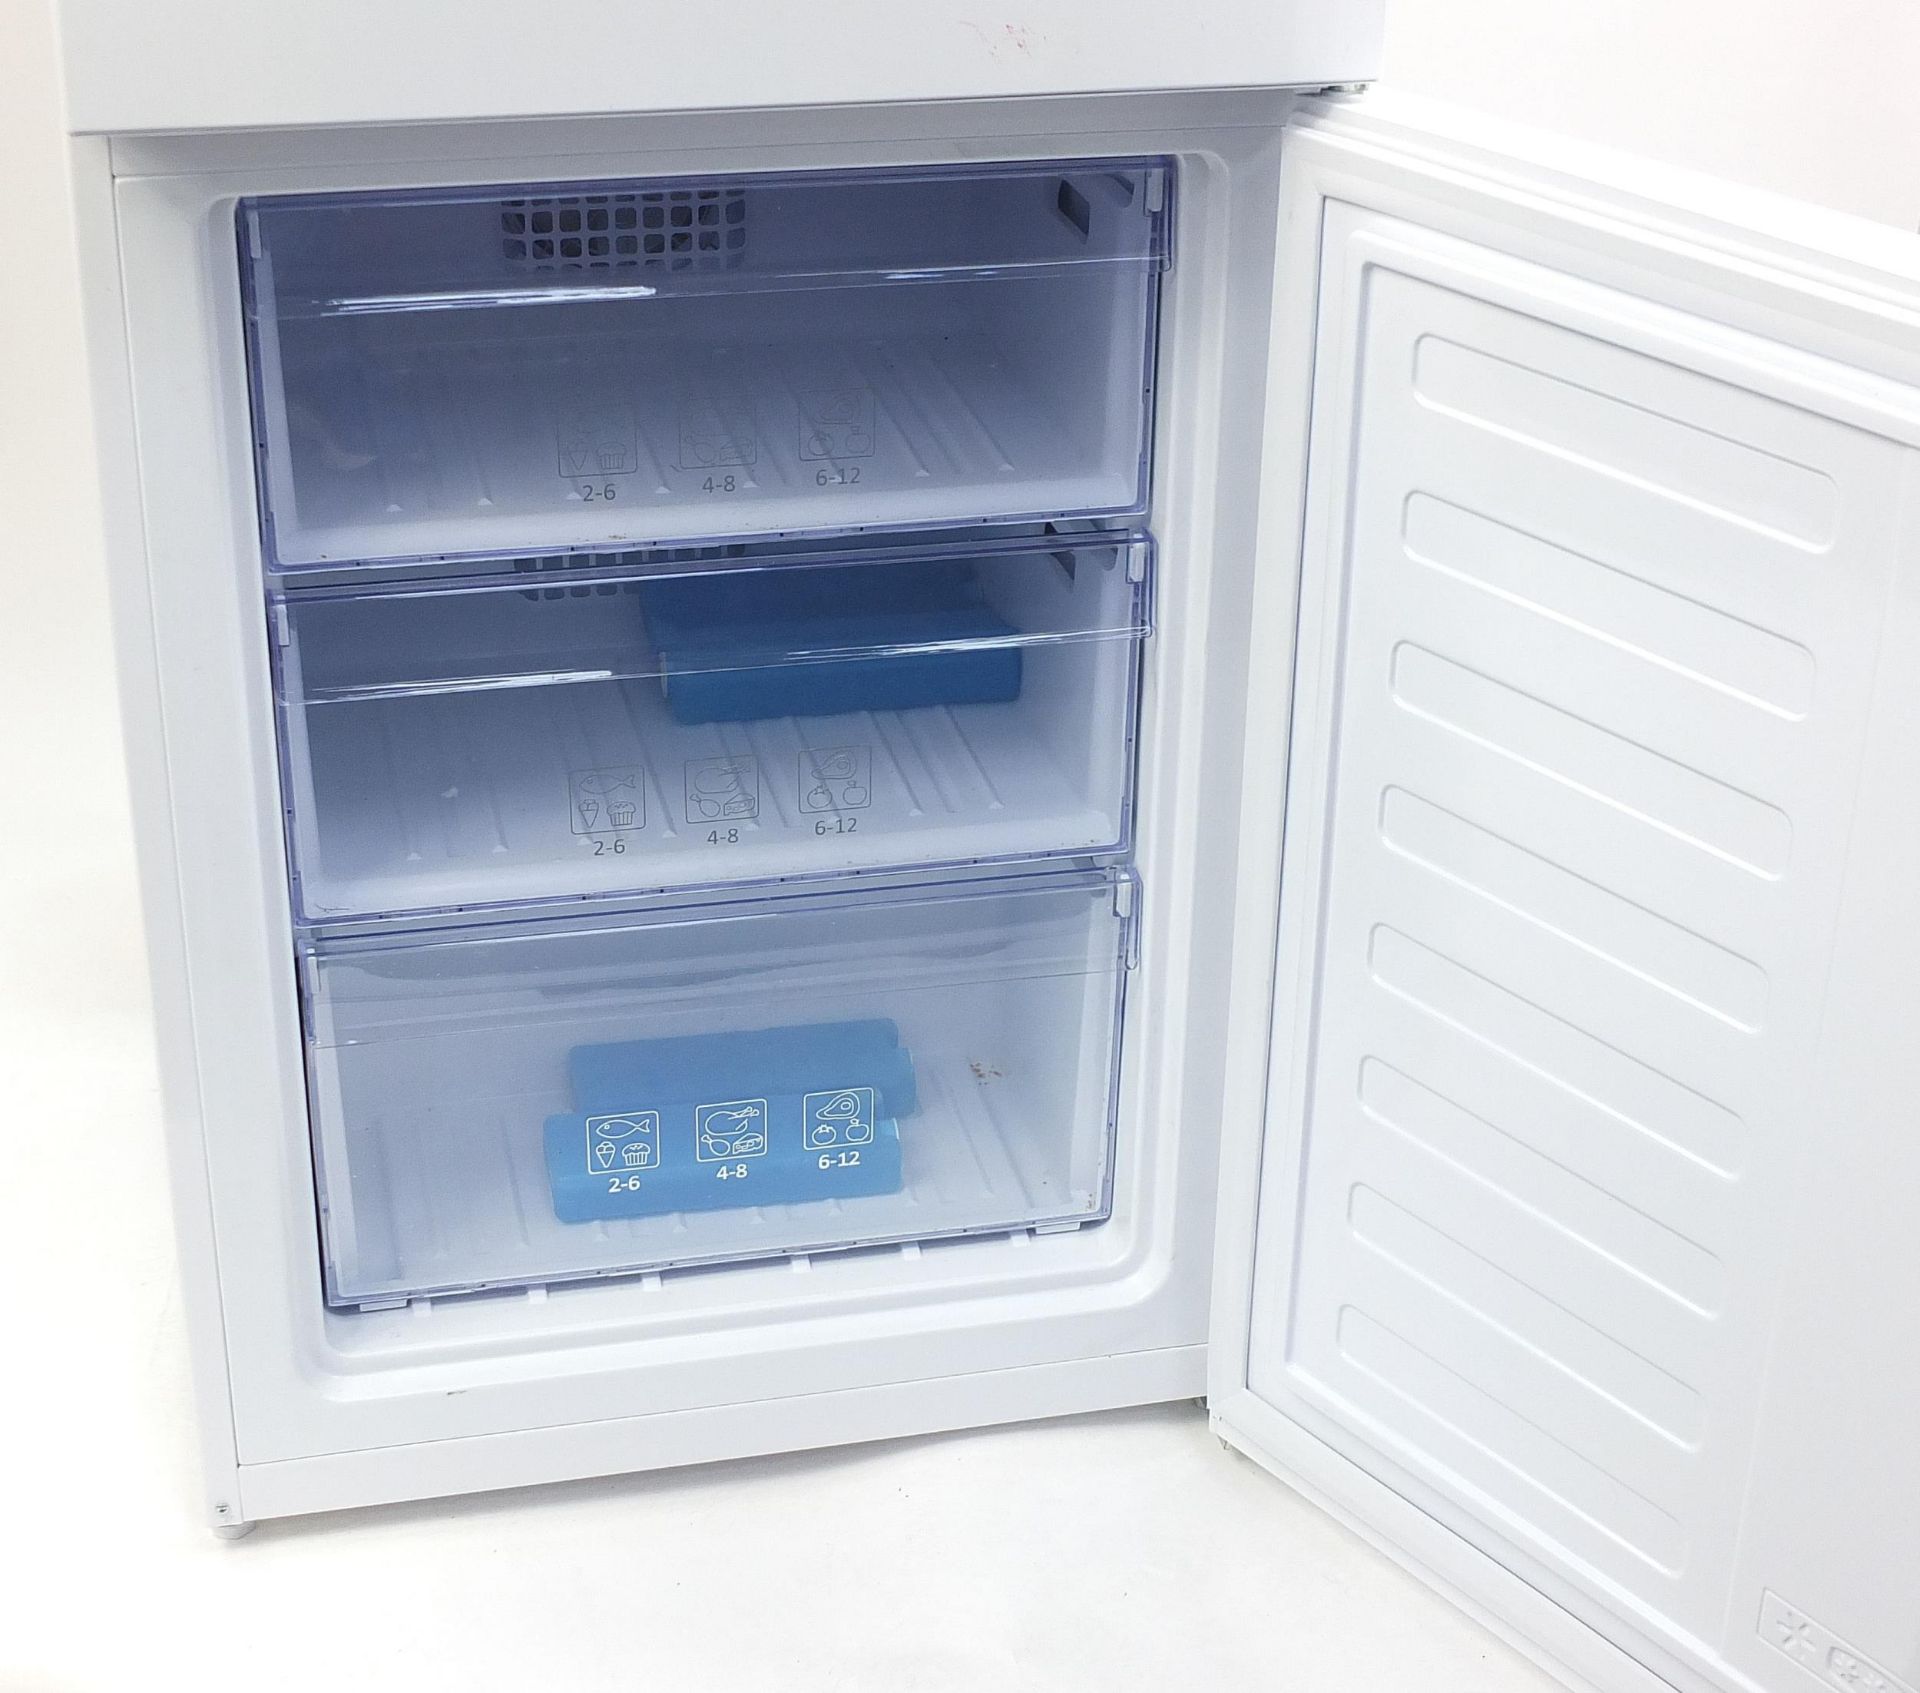 Beko fridge freezer, 172cm H x 59cm W x 64cm D - Image 3 of 4